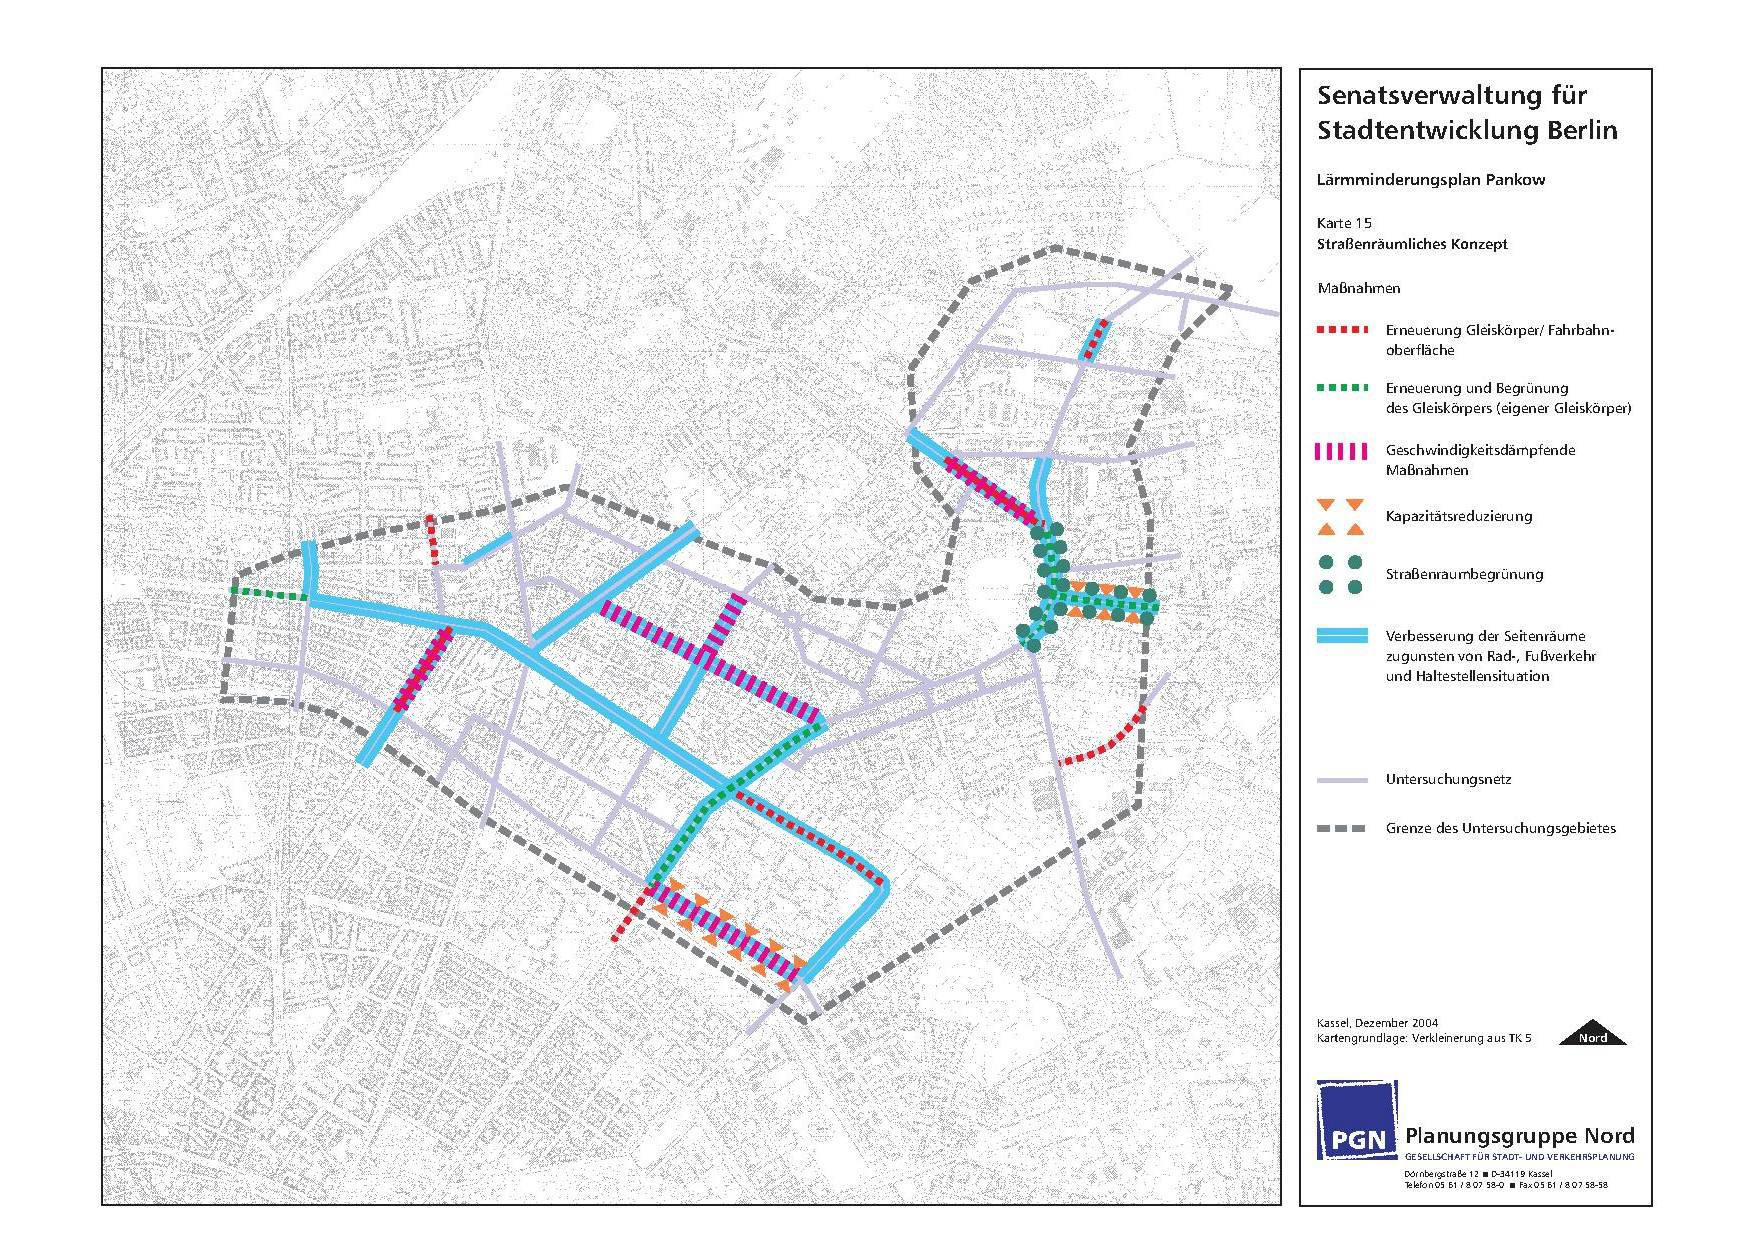 Pilotprojekt Pankow 2004/2006: Straßenräumliches Konzept